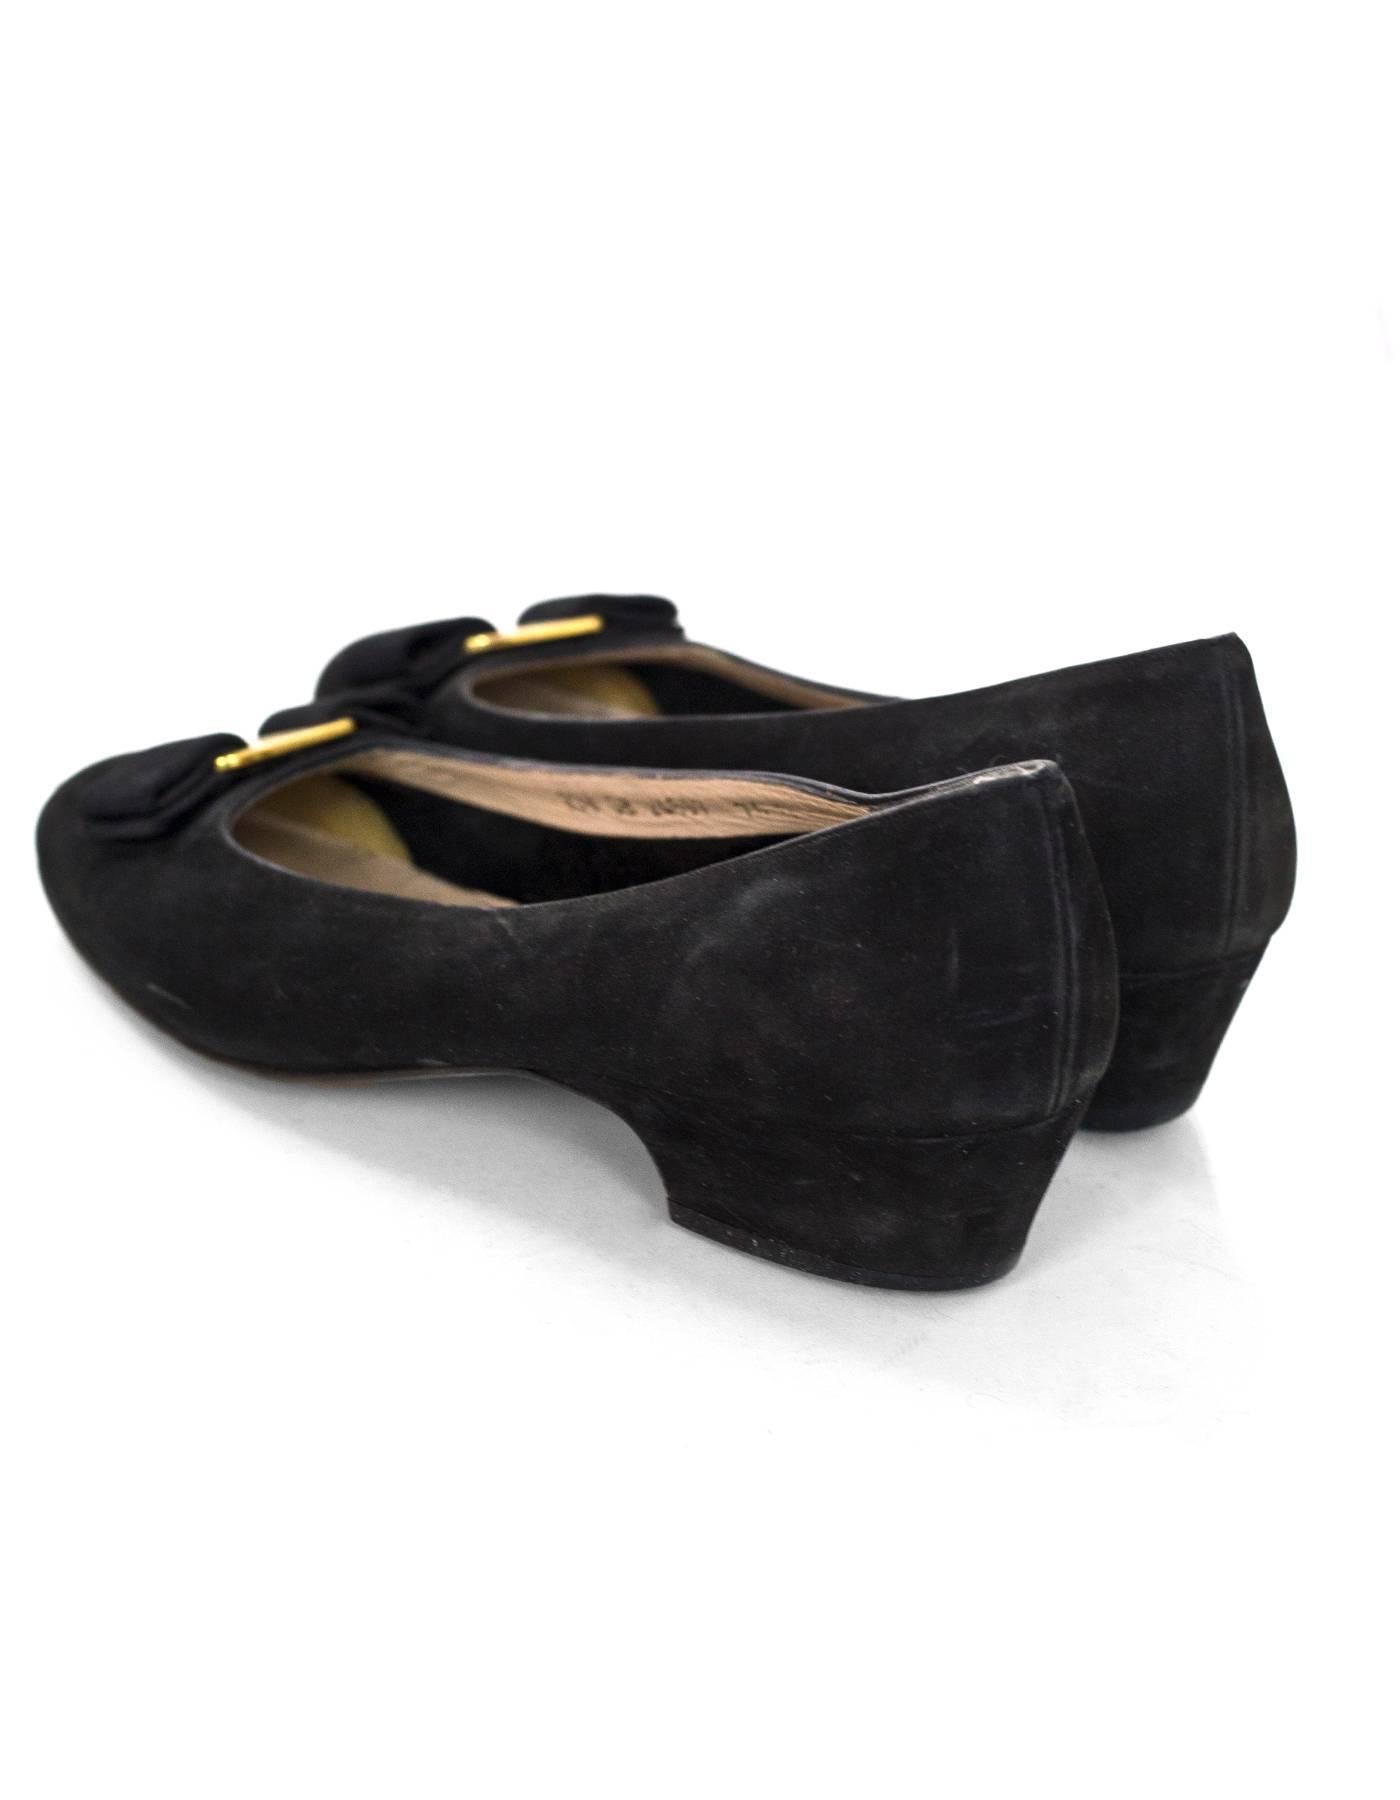 Women's Salvatore Ferragamo Black Varina Bow Shoes Size 37.5